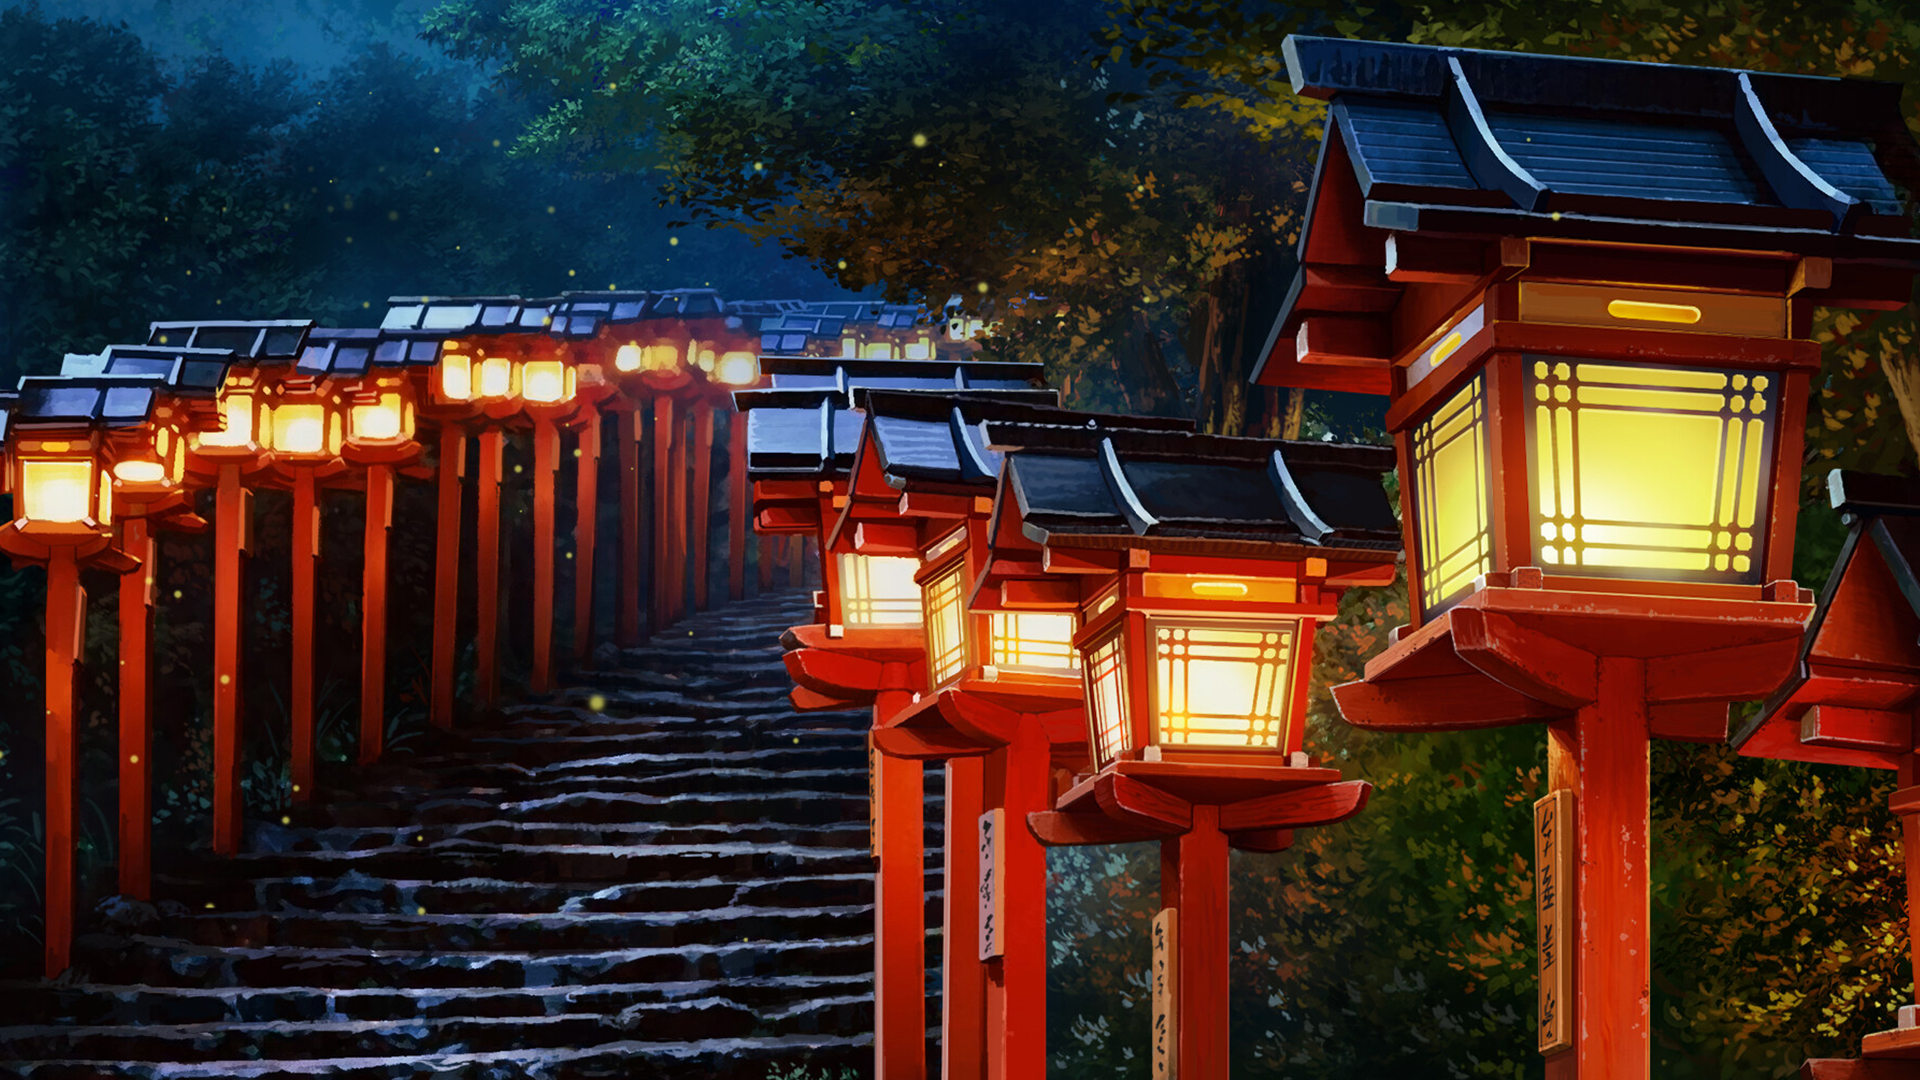 General 1920x1080 lantern japanese letters night trees stairs fireflies path moonlight stone stairs digital art